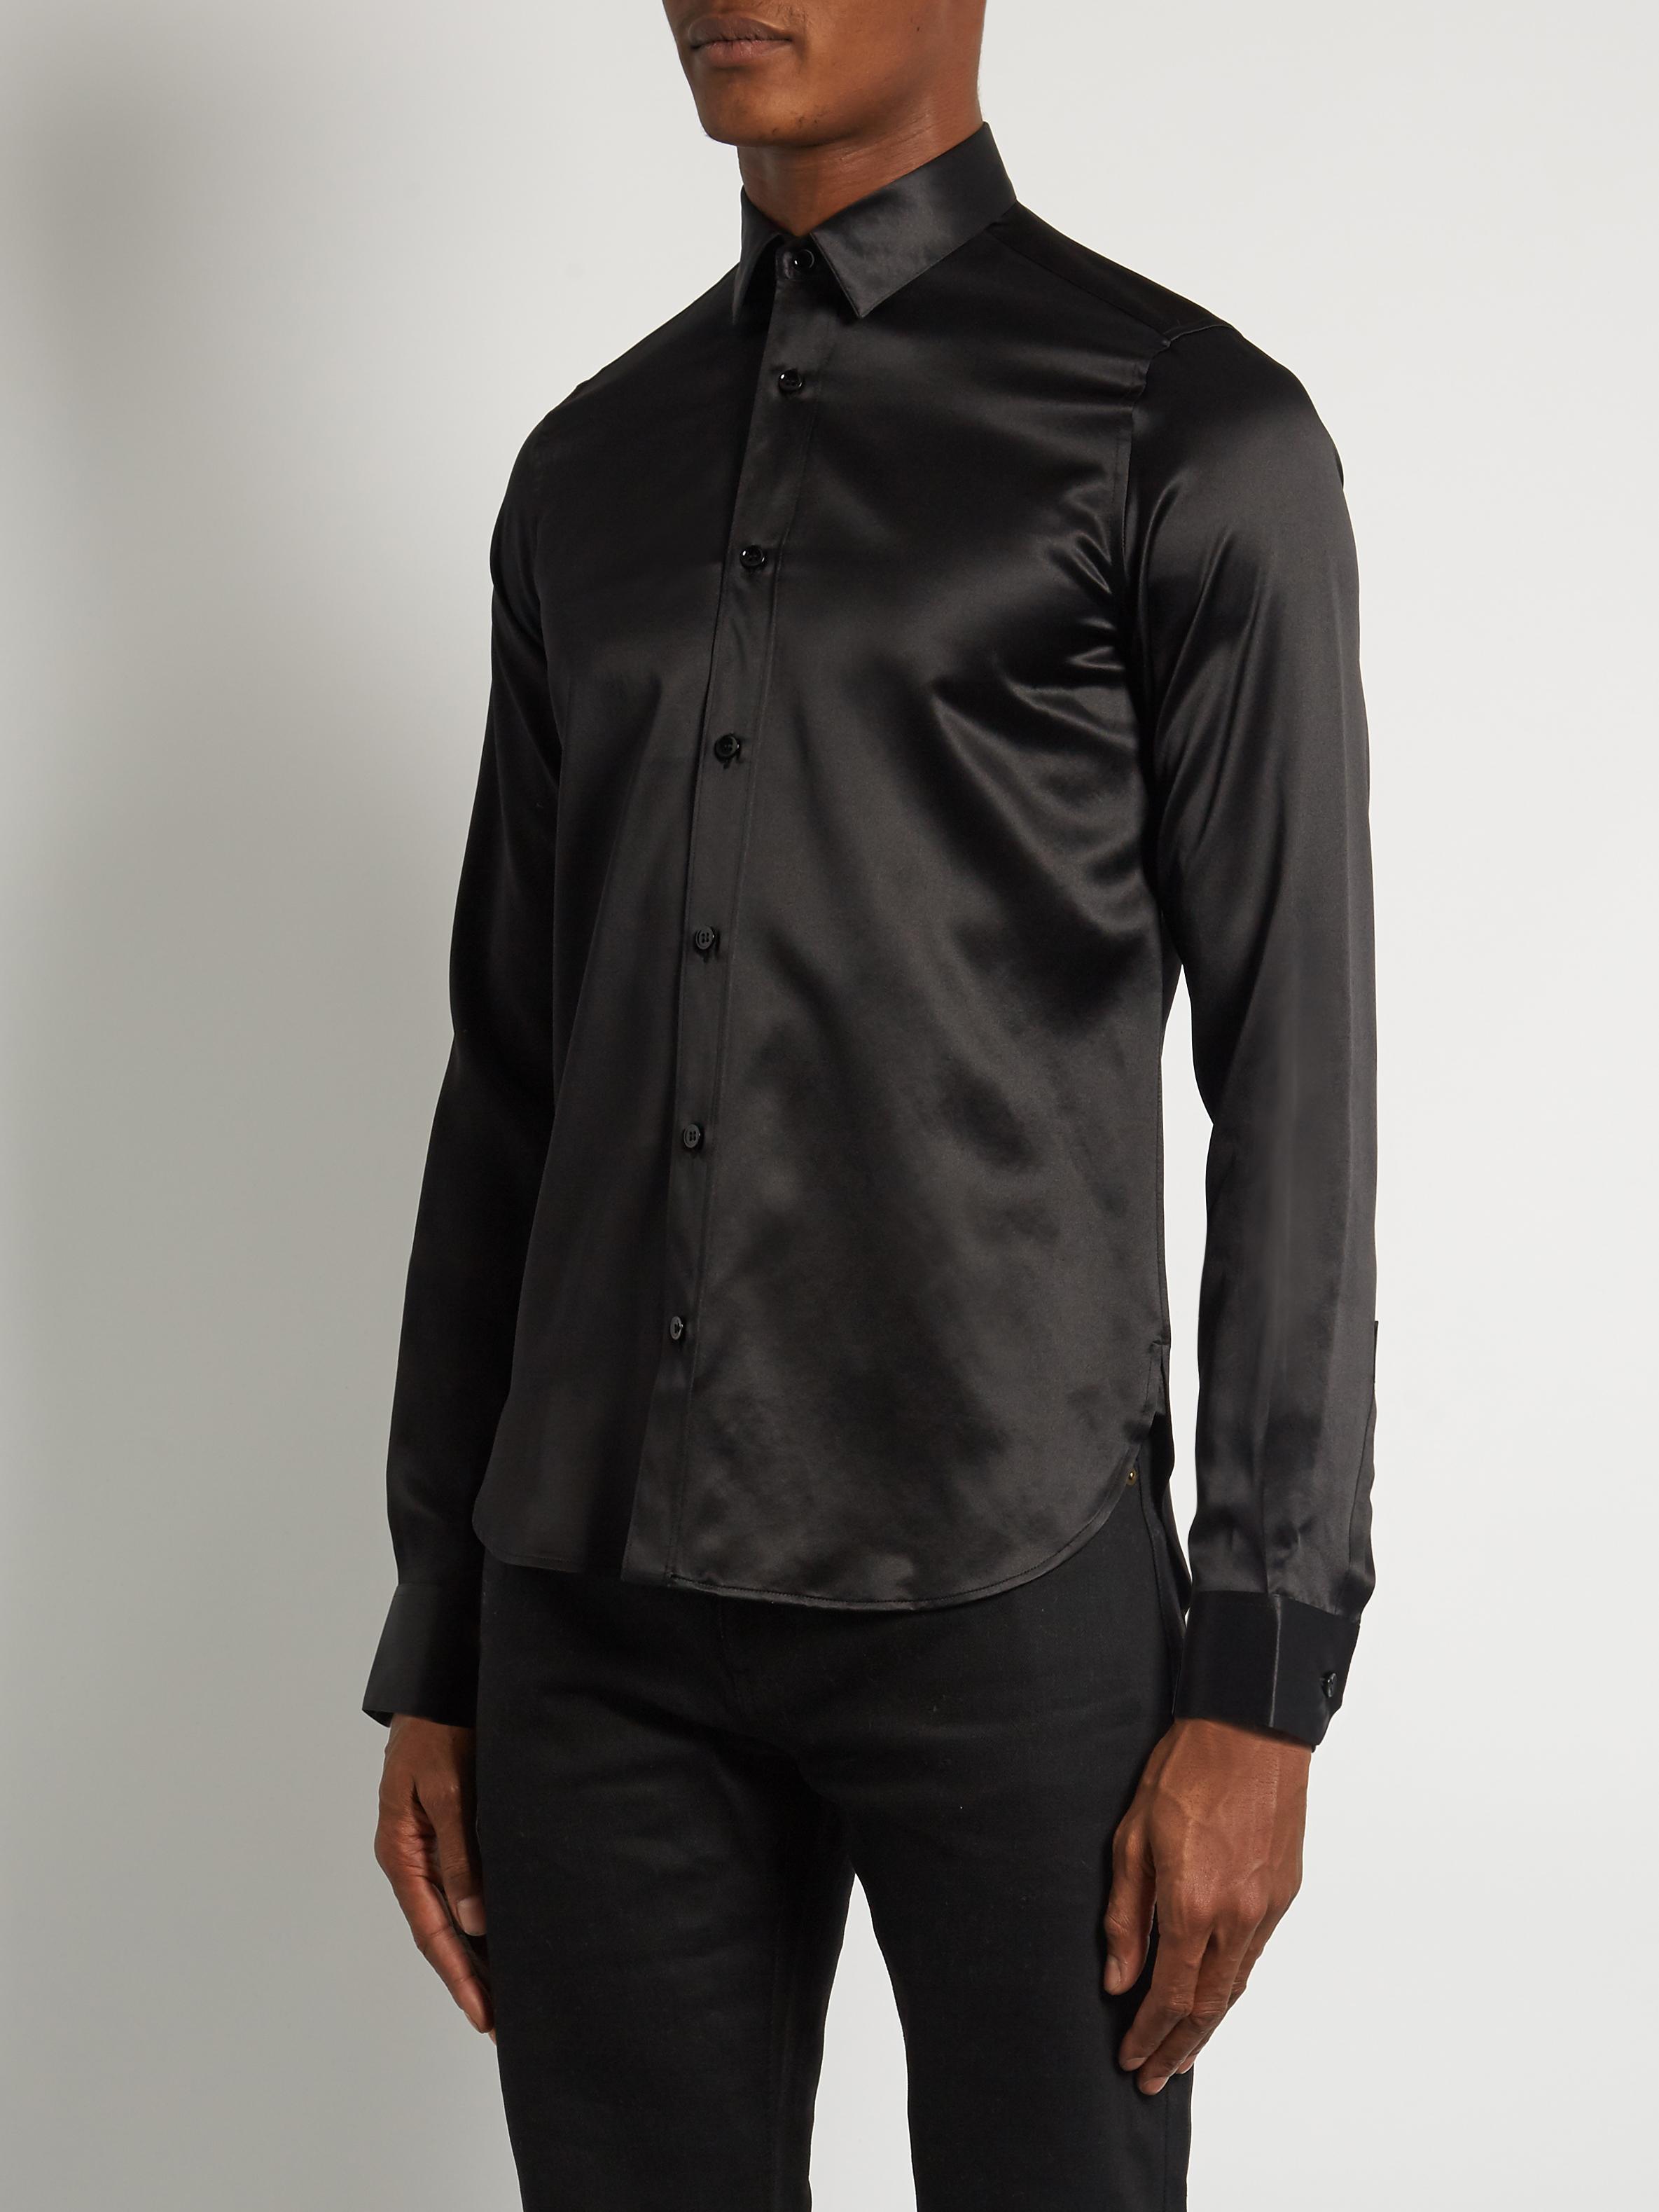 Saint Laurent Point-collar Silk-satin Shirt in Black for Men - Lyst